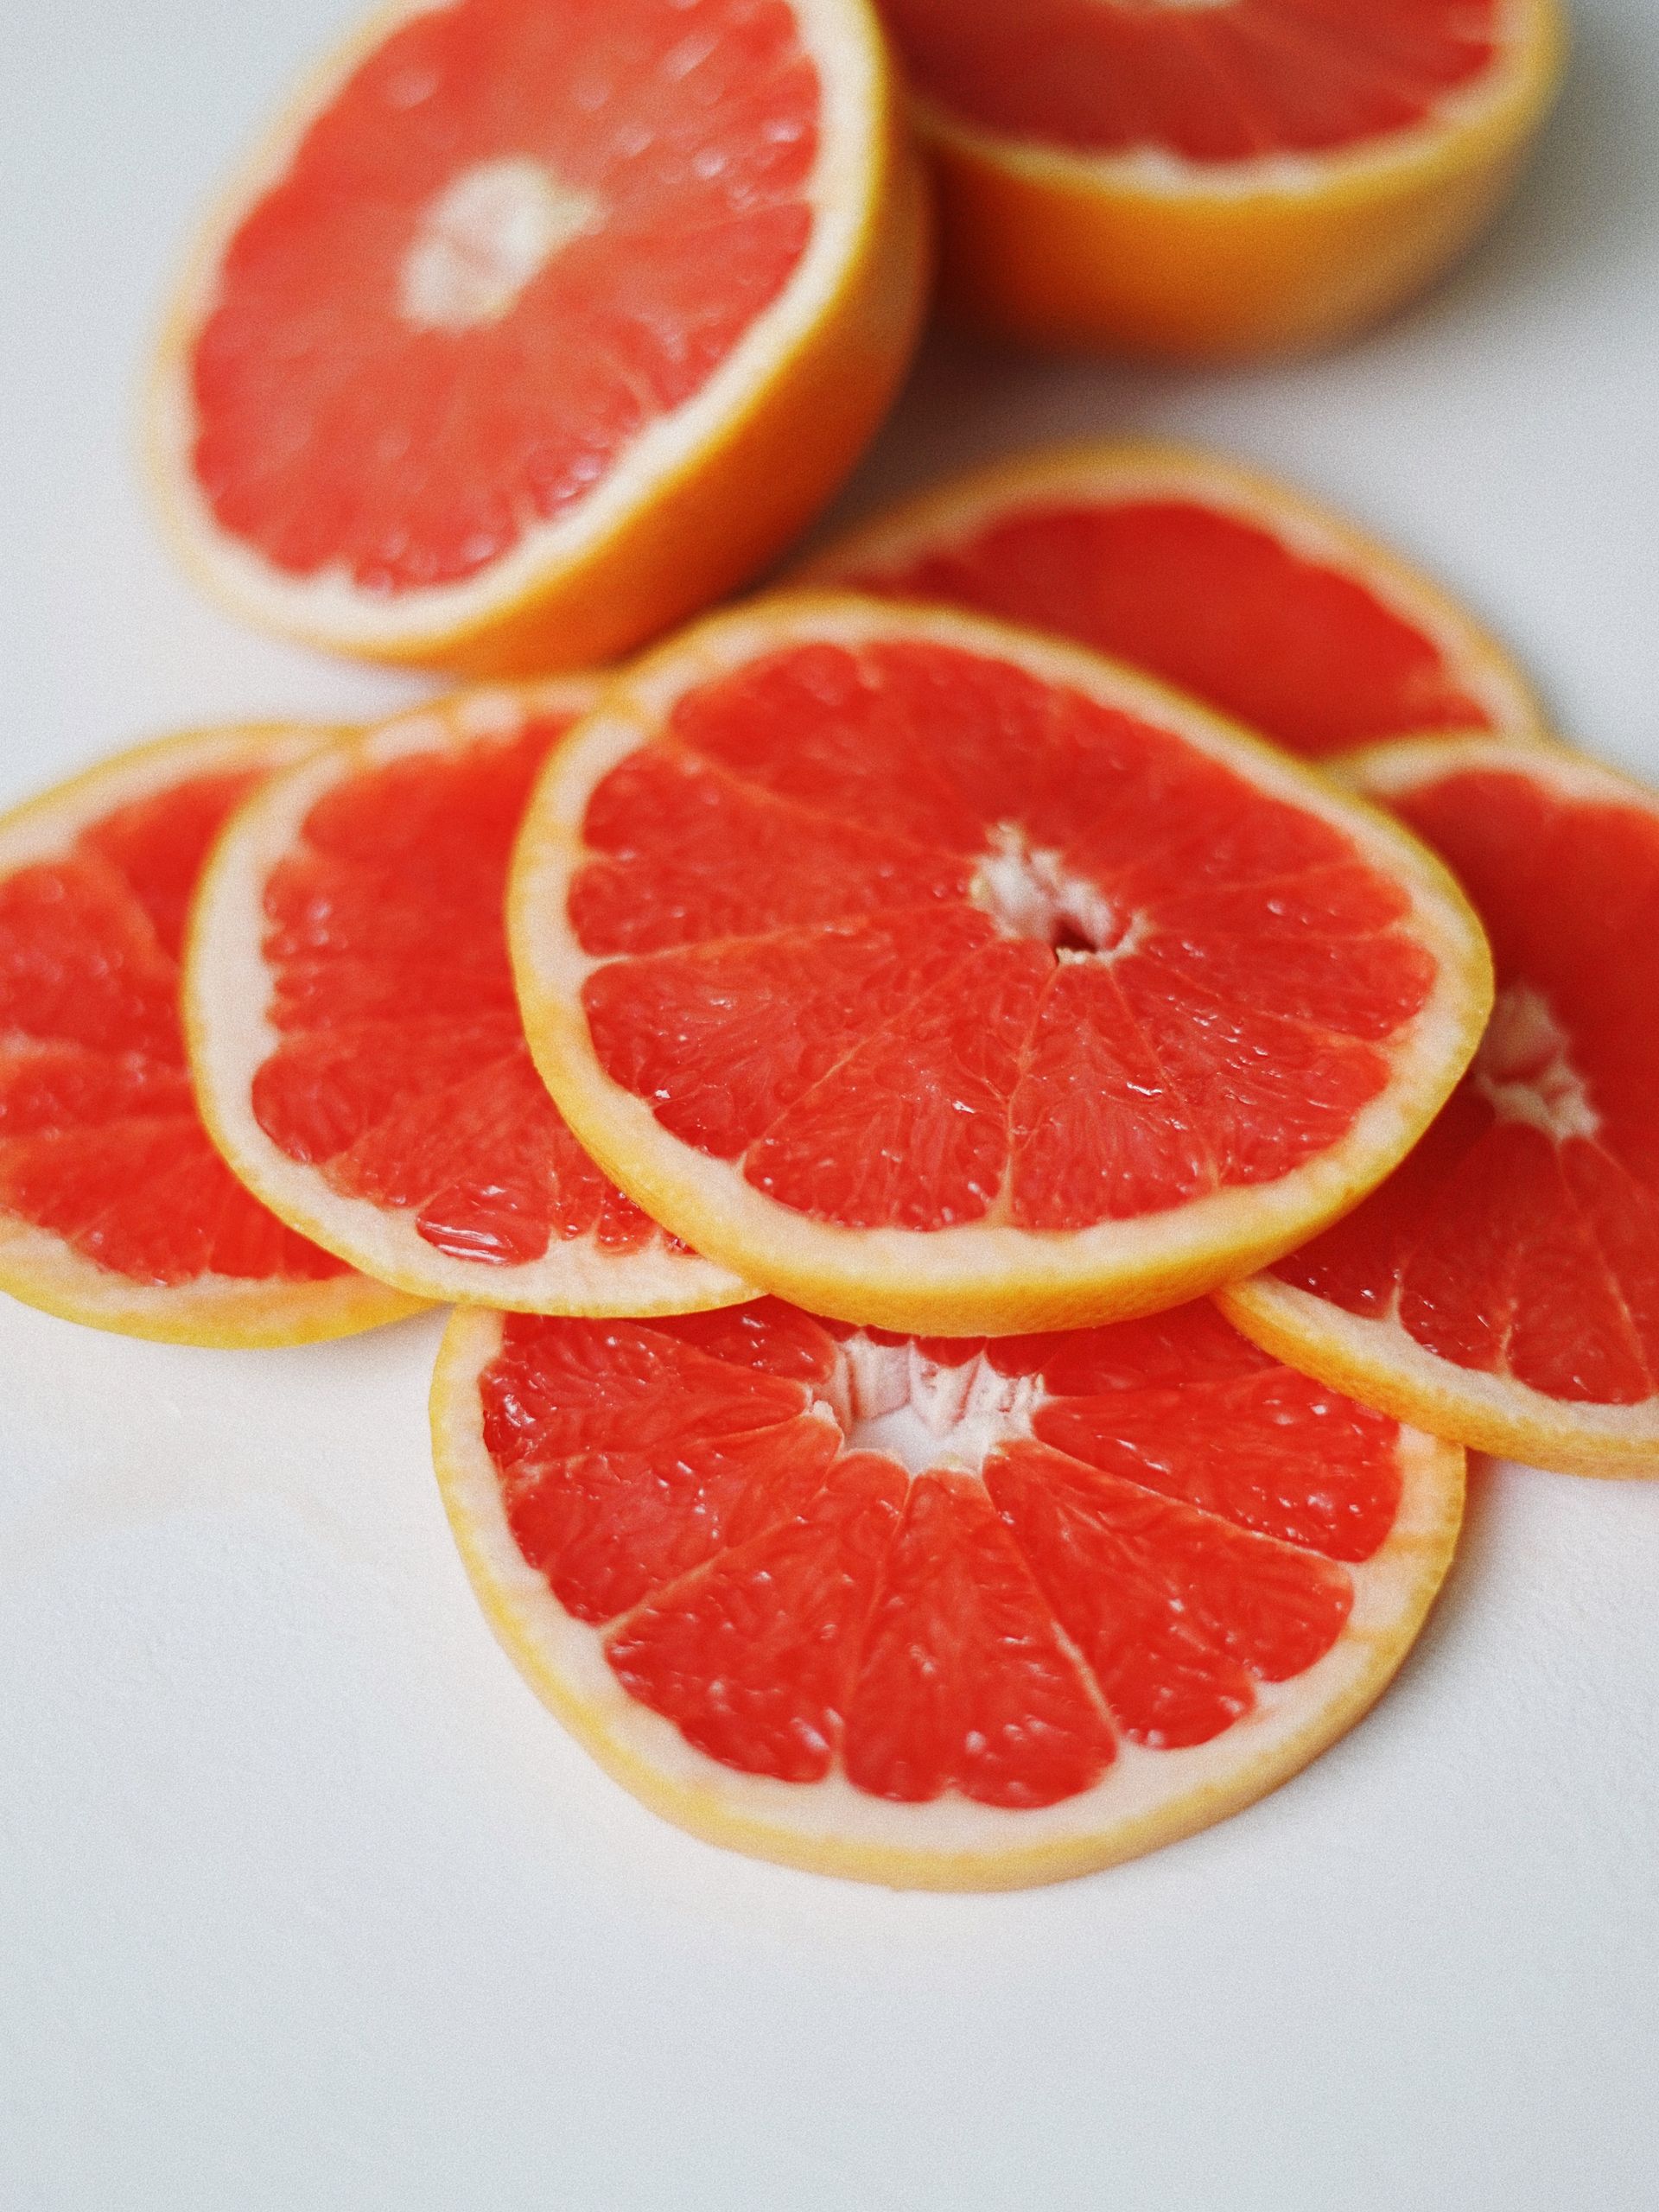 slices of grapefruit